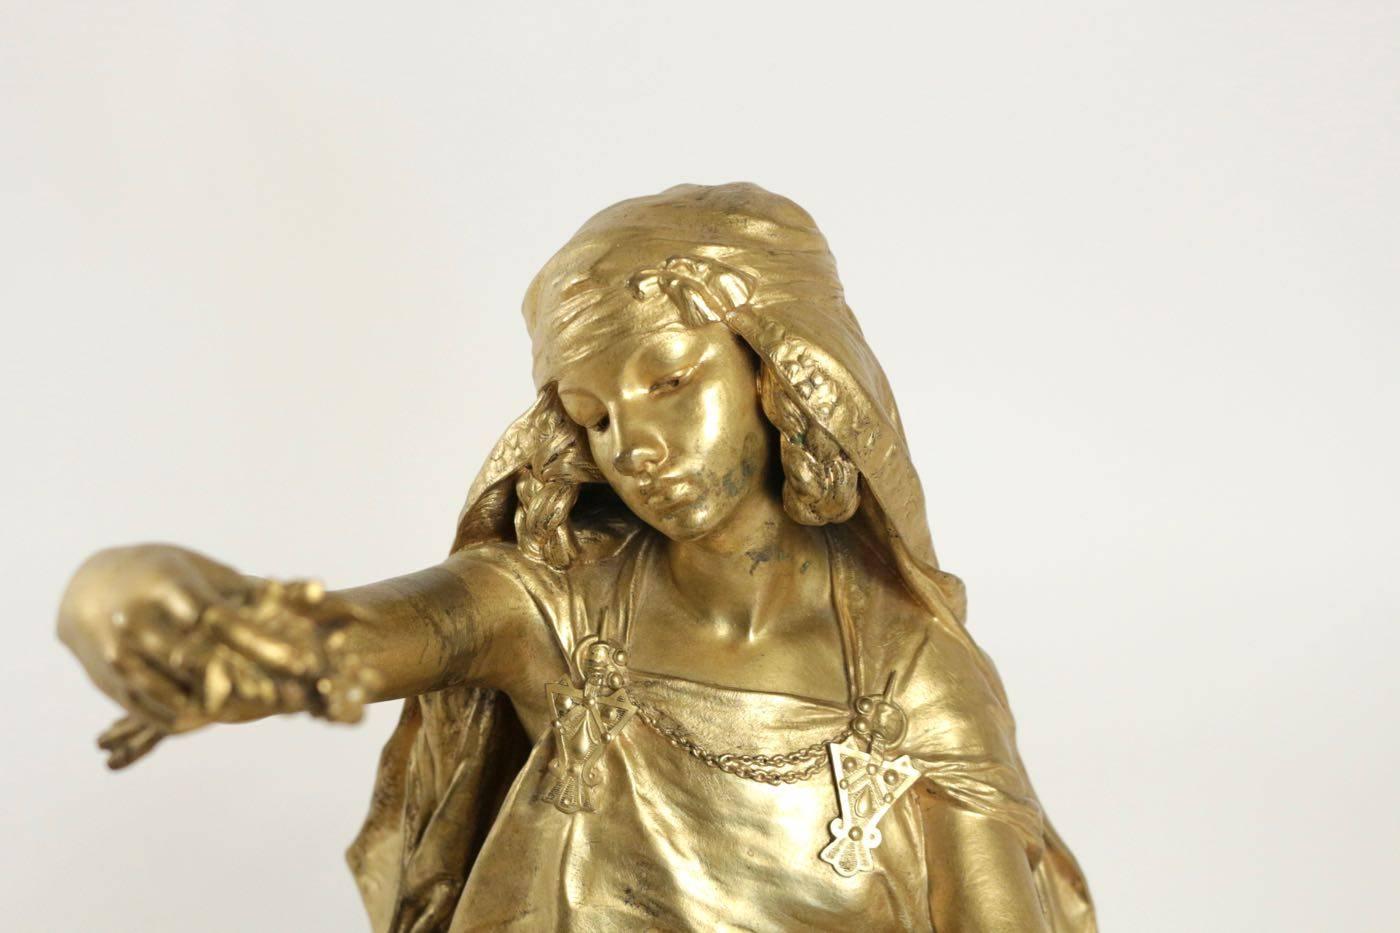 Bronze by Louis Ernest Barrias, “Little girl seated” in gold gilt bronze, original gilding. Swiss foundary Paris. Signed Bariasse, circa 1900.
Measure: H 31cm, L 31cm, P 27cm.
 